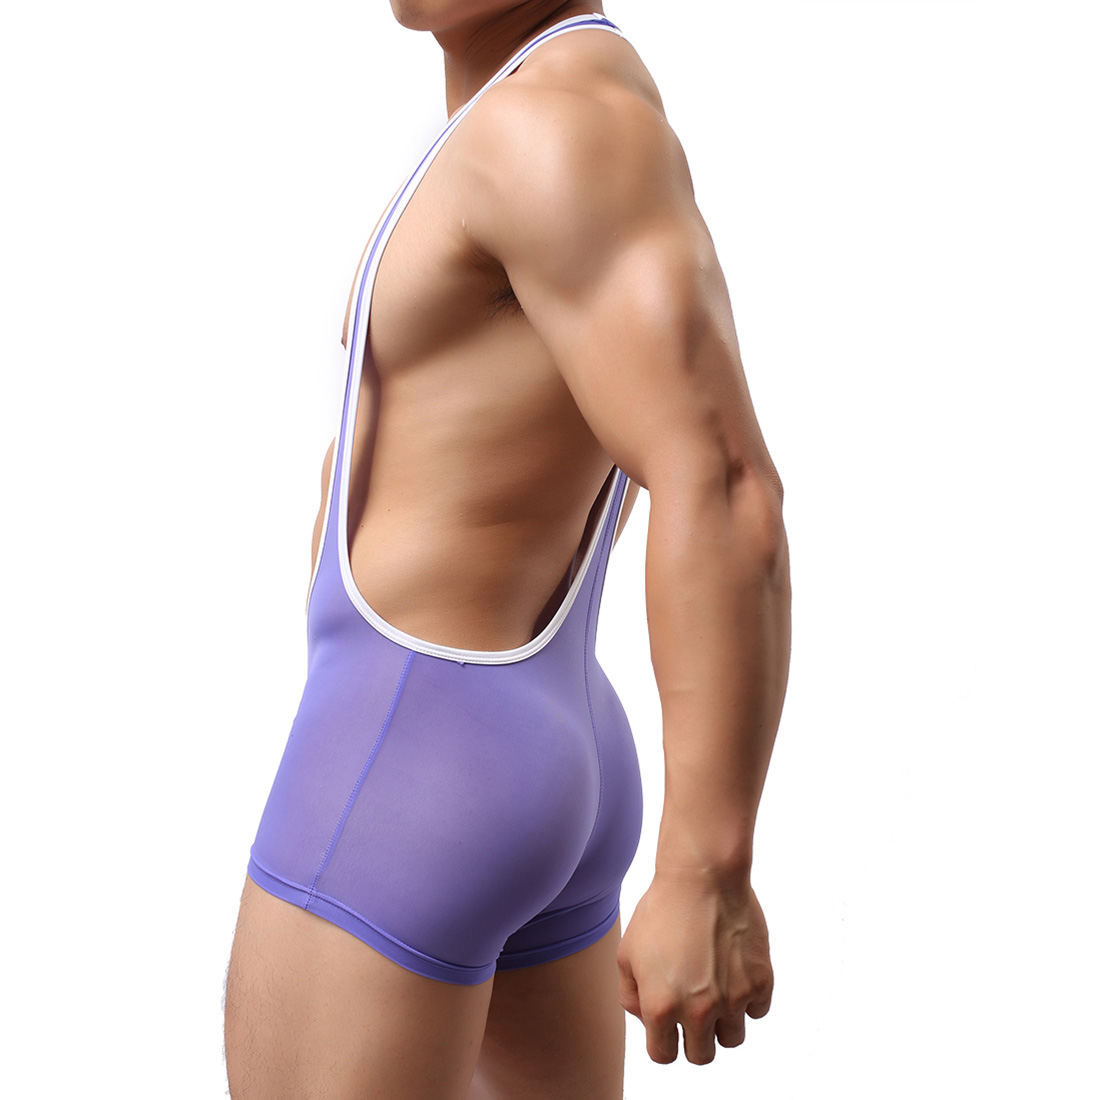 Men's Sexy Lingerie Underwear Sport Fitness One-pieces Swimsuit Wrestling Dress WH41 Purple XL